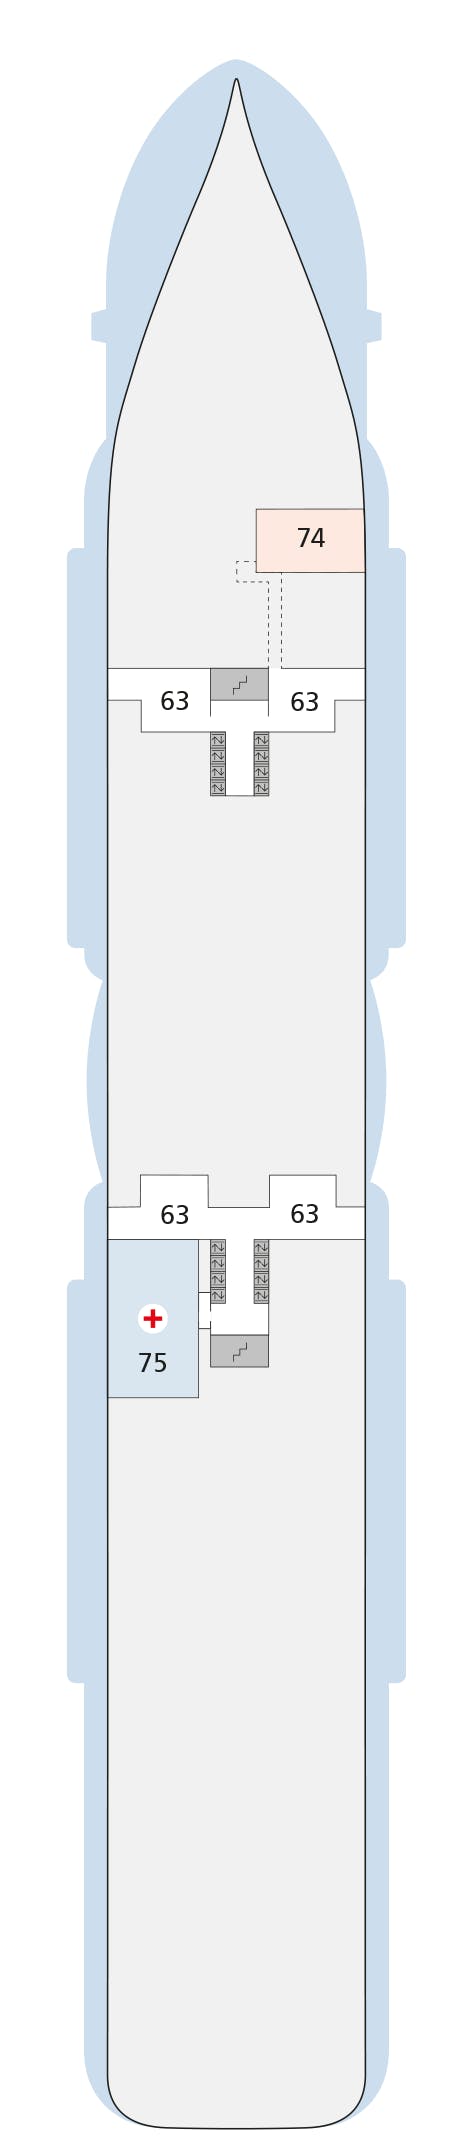 AIDAnova - AIDA Cruises - Deck 3 (Deck 3)